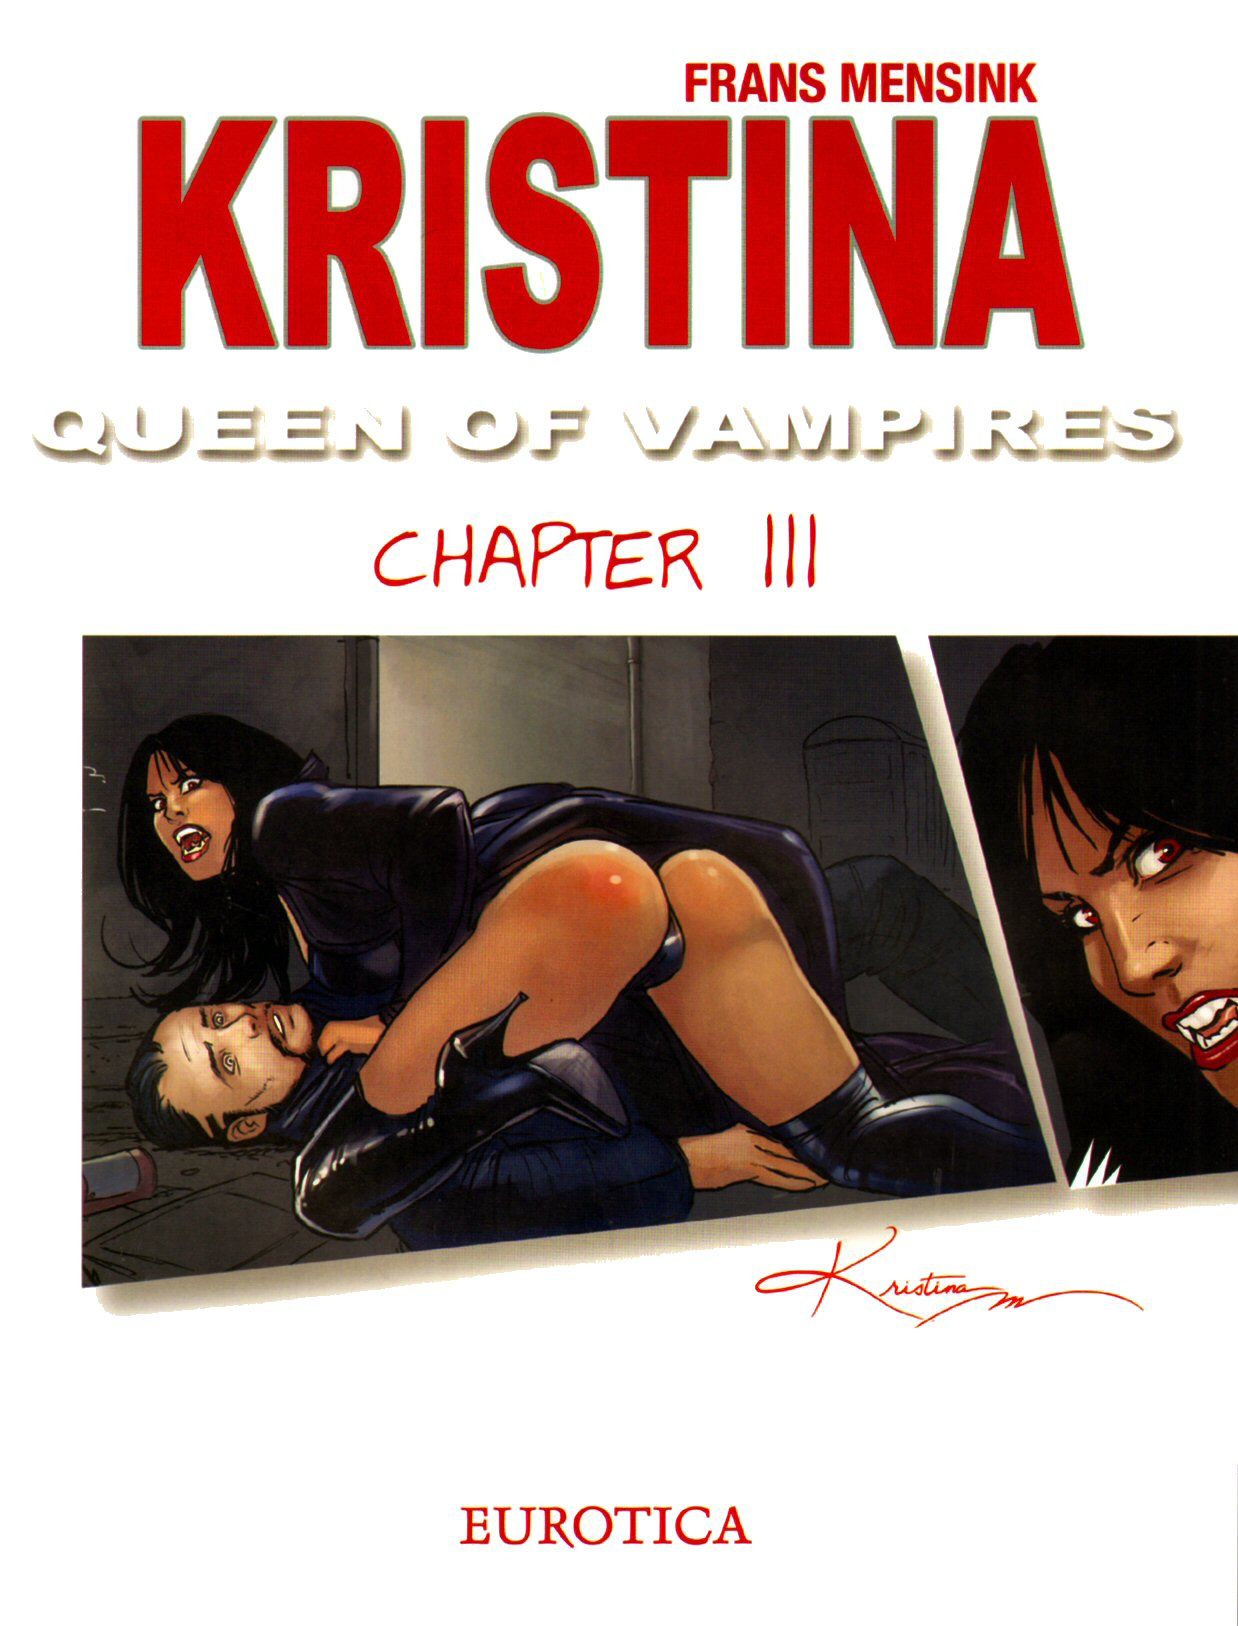 Фрэн mensink Кристина королева из вампиры глава 3